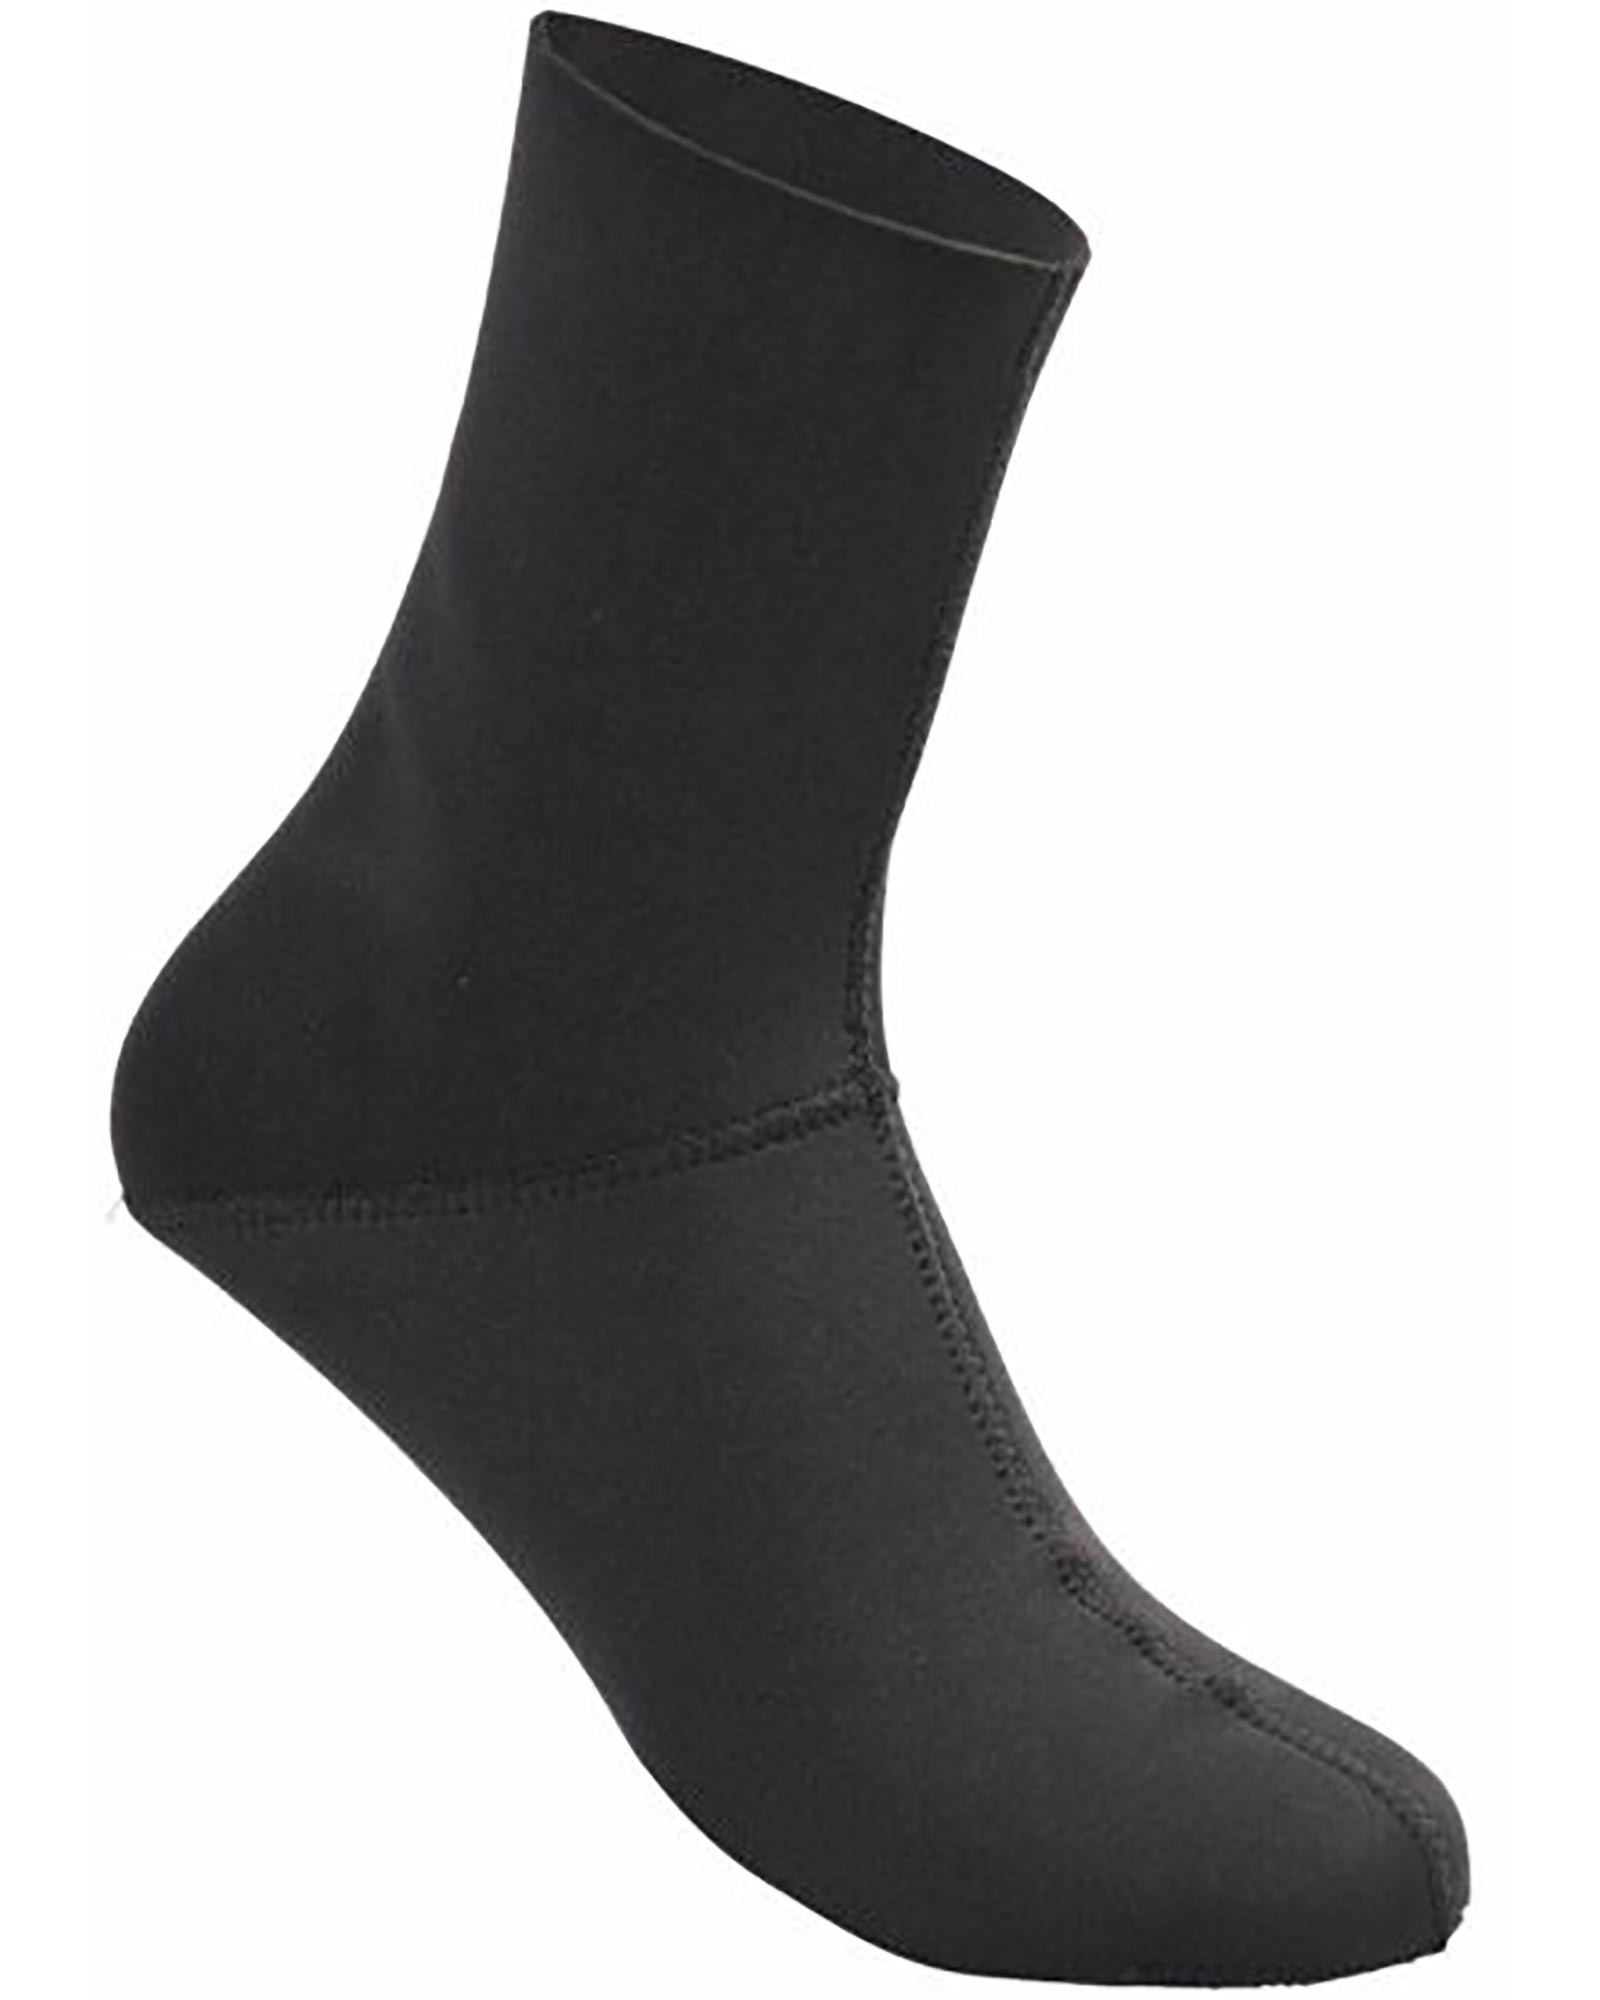 Inov 8 Extreme Thermo Socks - black L